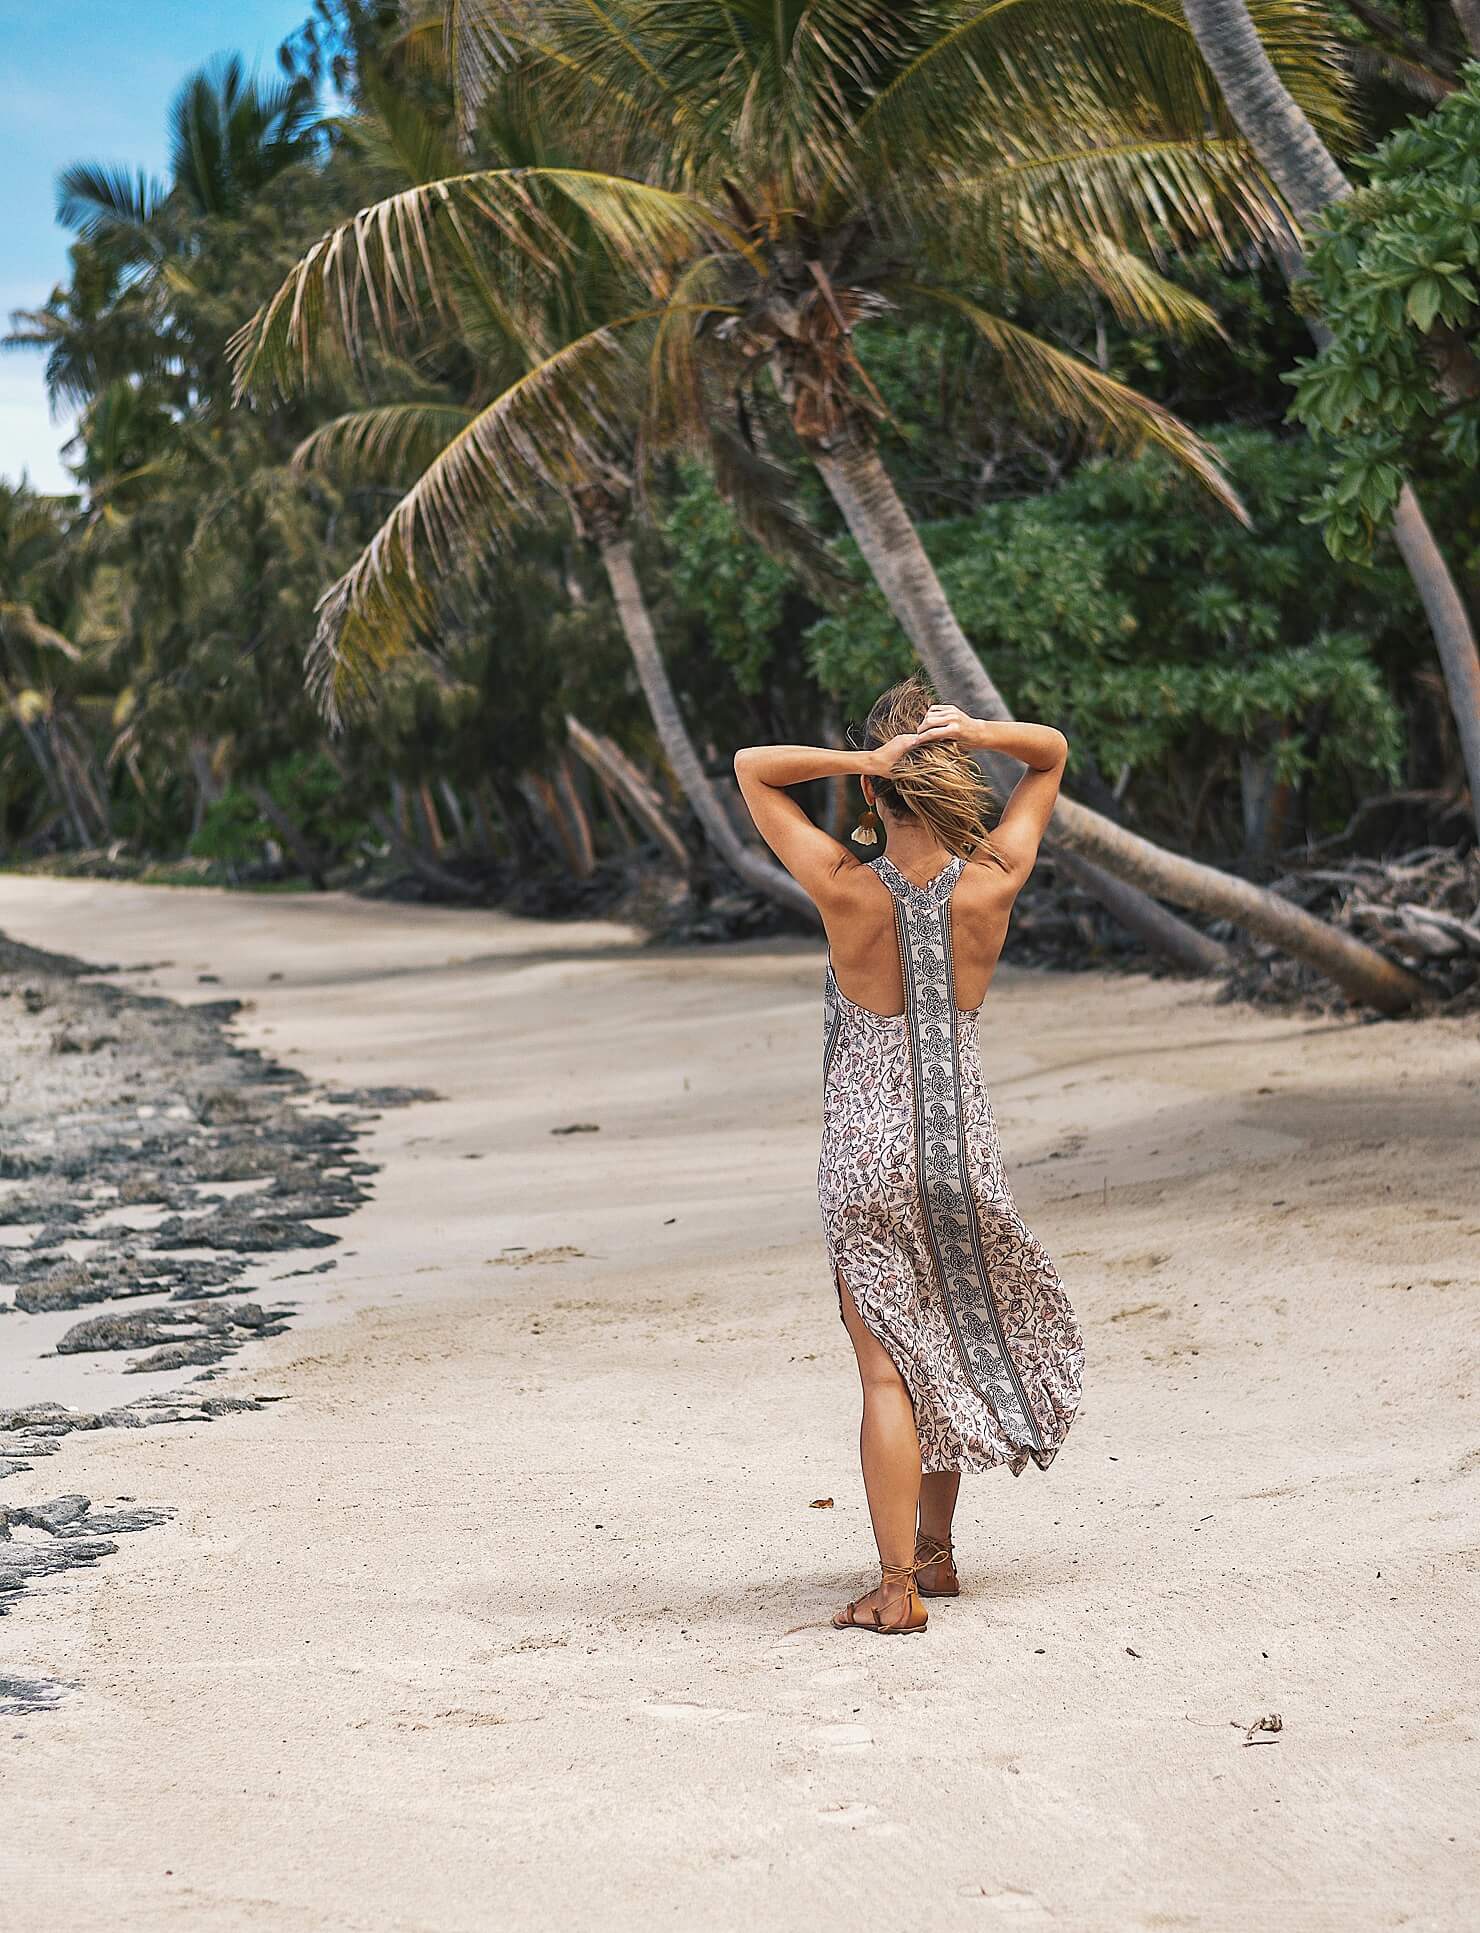 Turtle Island, Fiji - brighton keller wearing printed maxi dress on beach